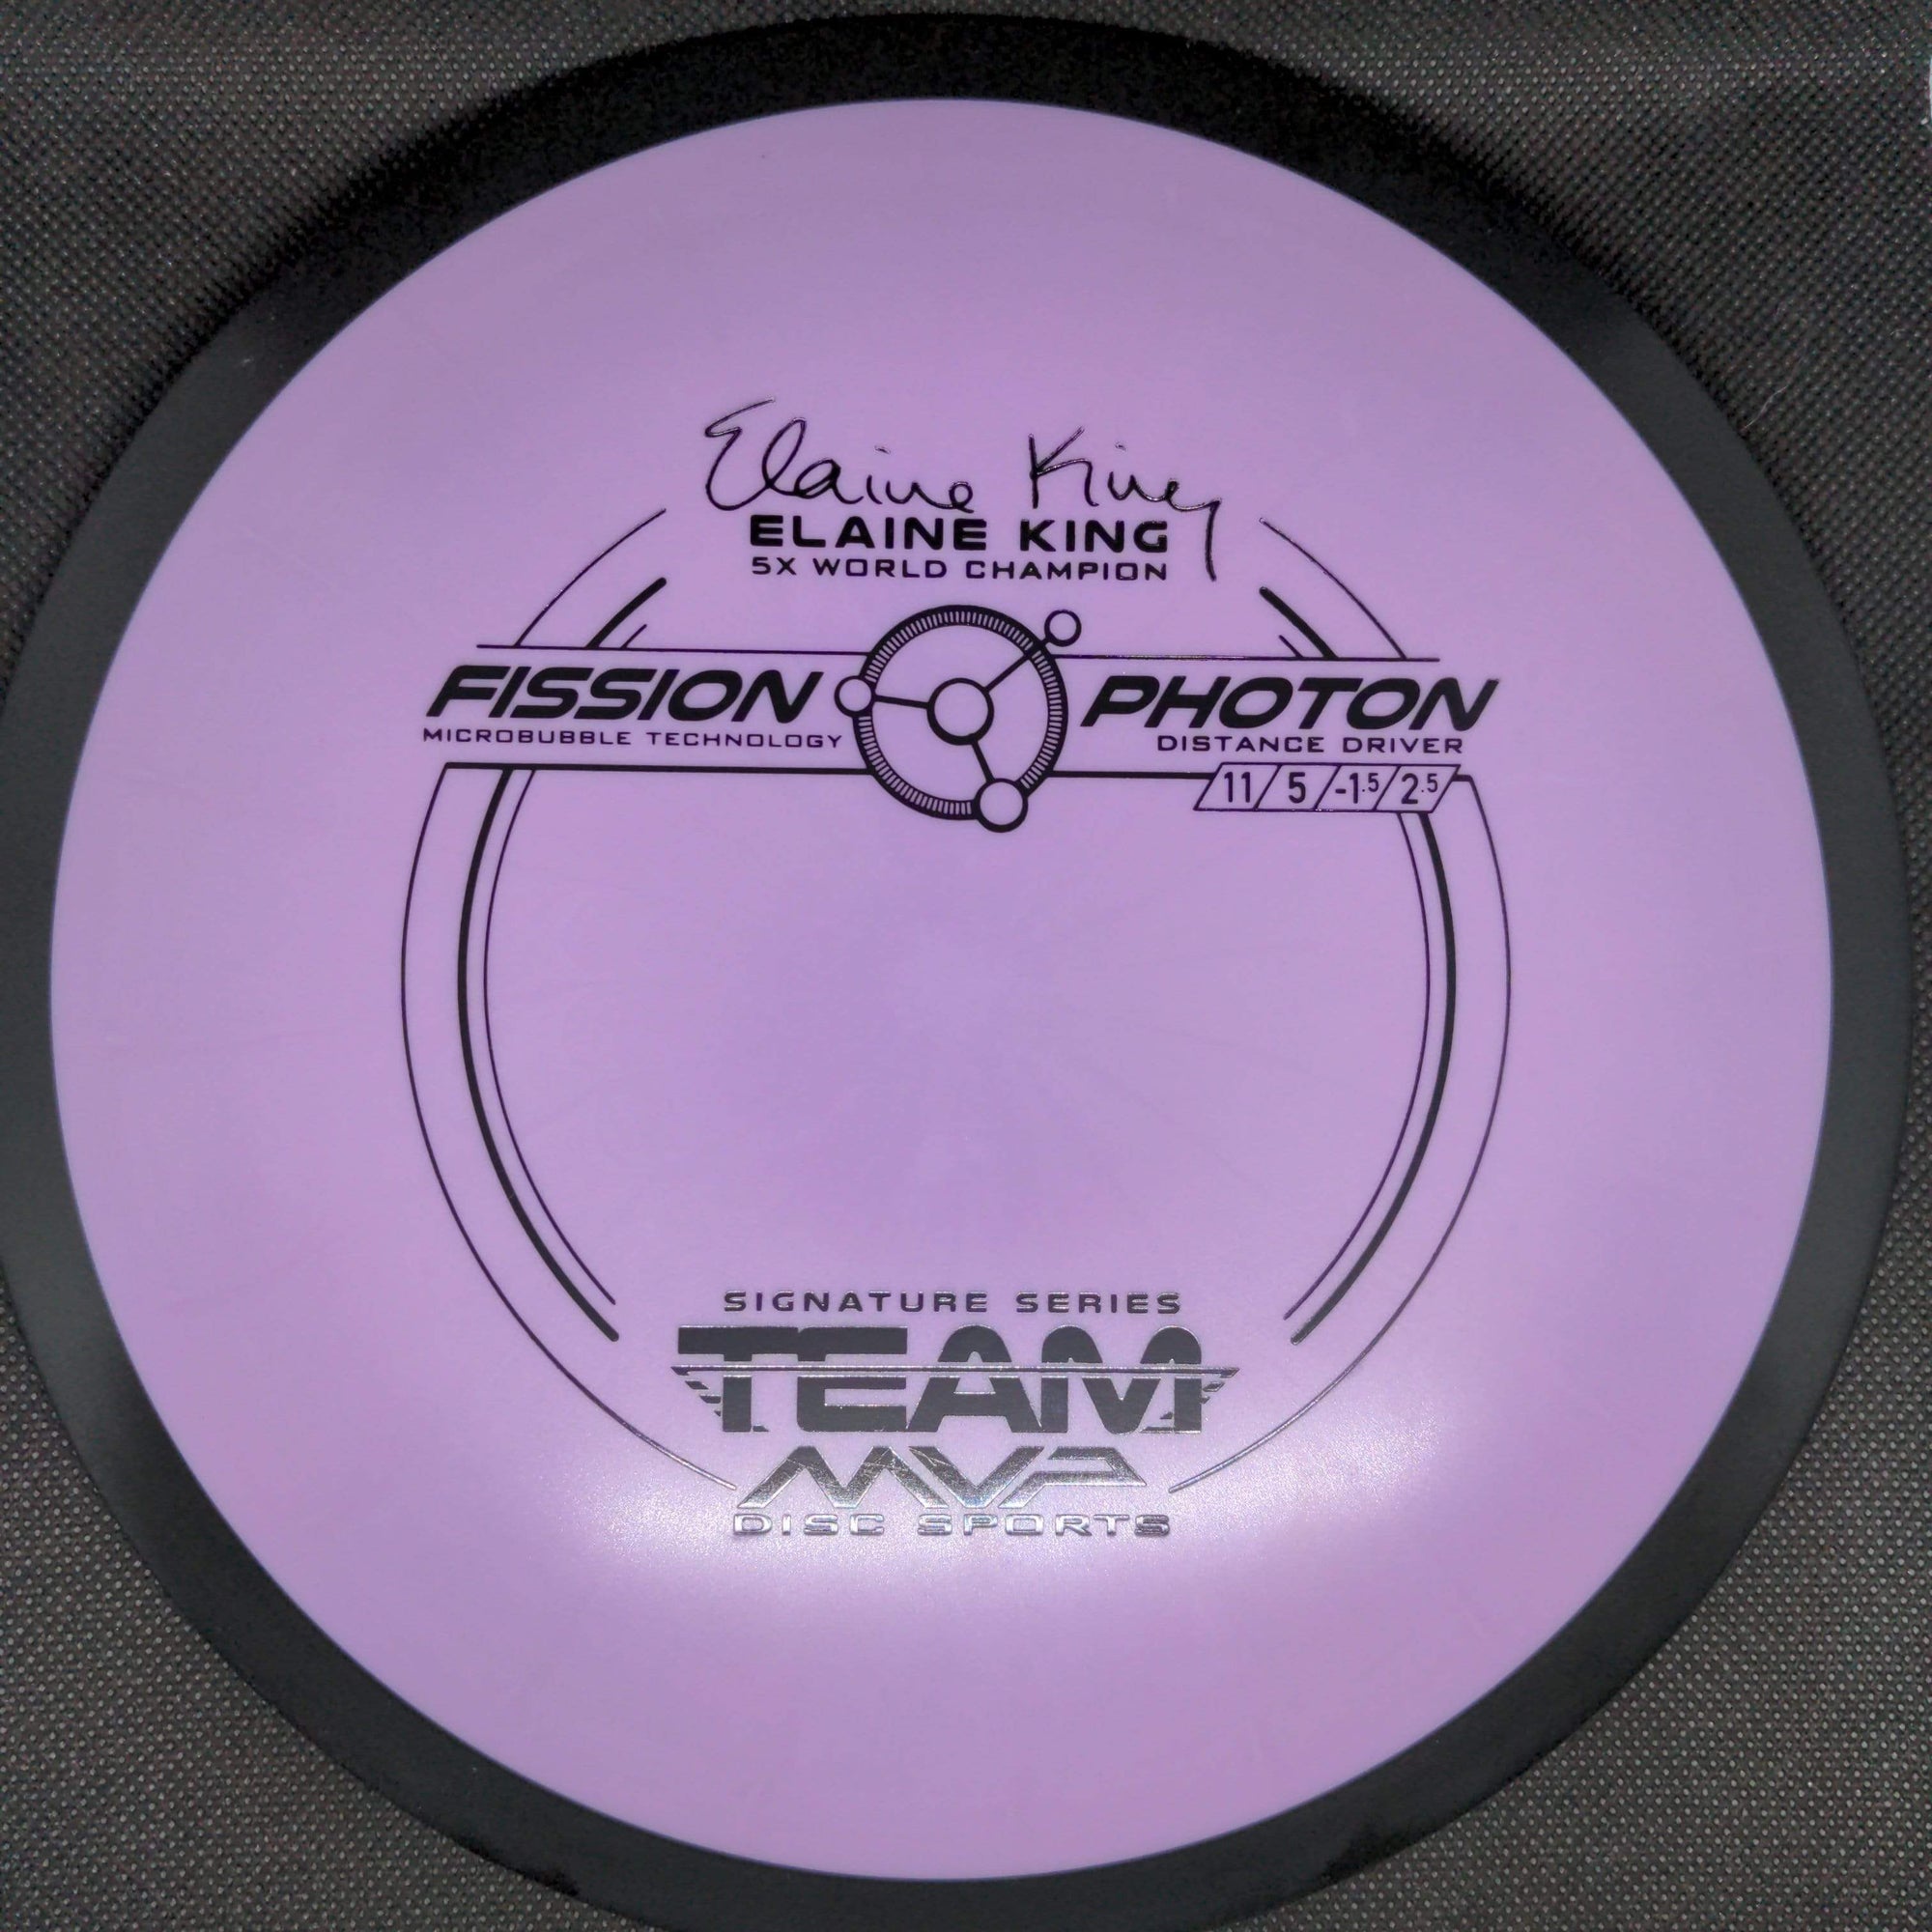 MVP Distance Driver Purple 175g Fission Photon - Elaine King 5x champion